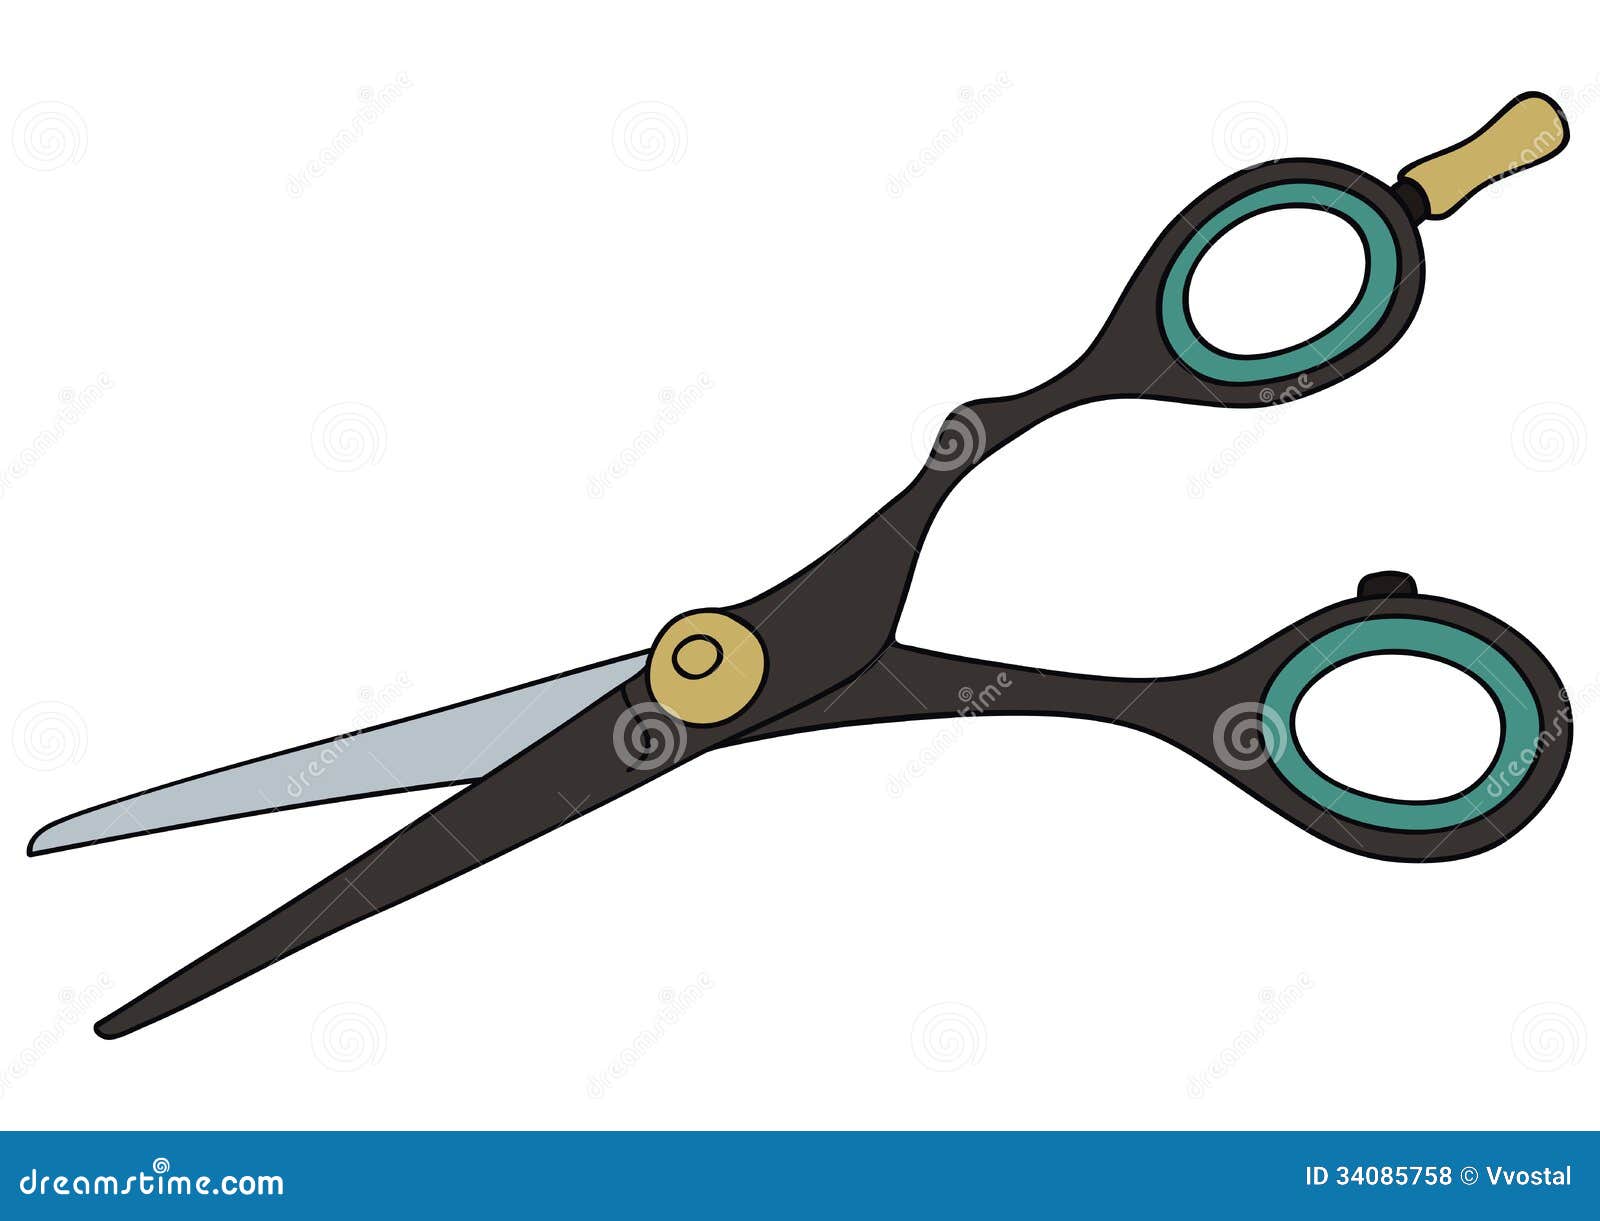 Hairdresser Man And Woman Scissors Concept Stock Illustration